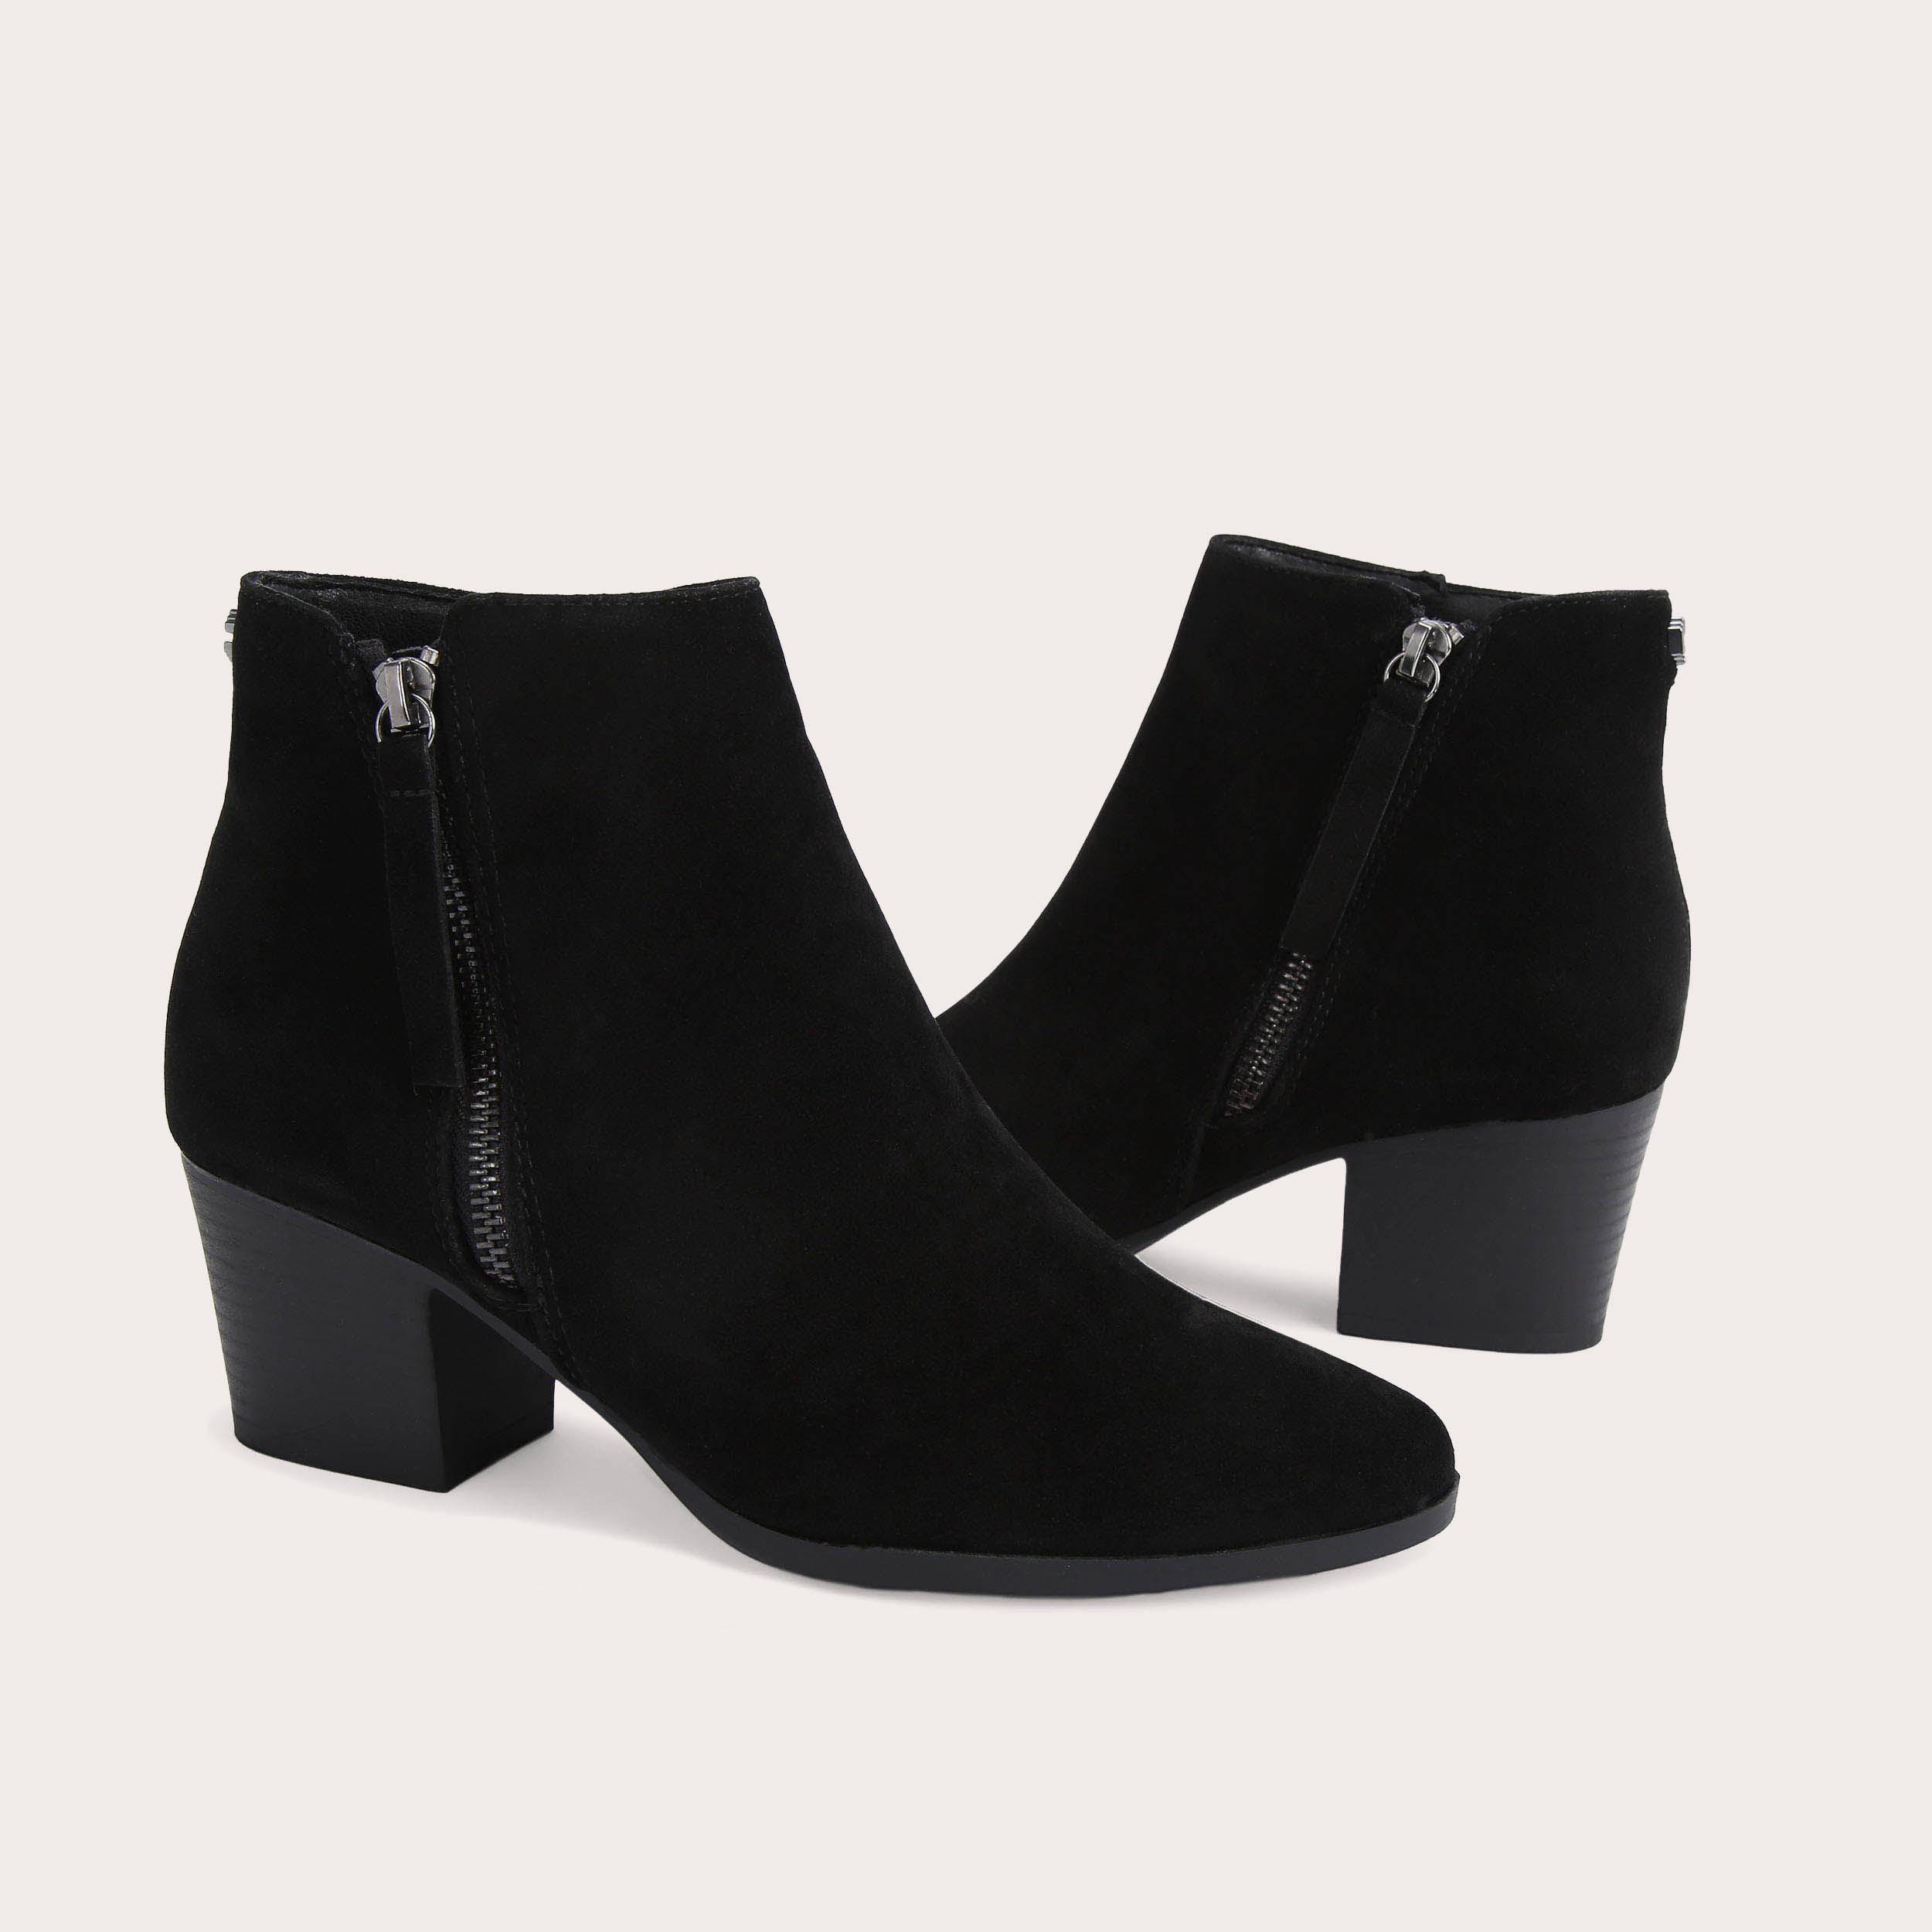 TESSA Black Block Heel Ankle Boots by CARVELA COMFORT